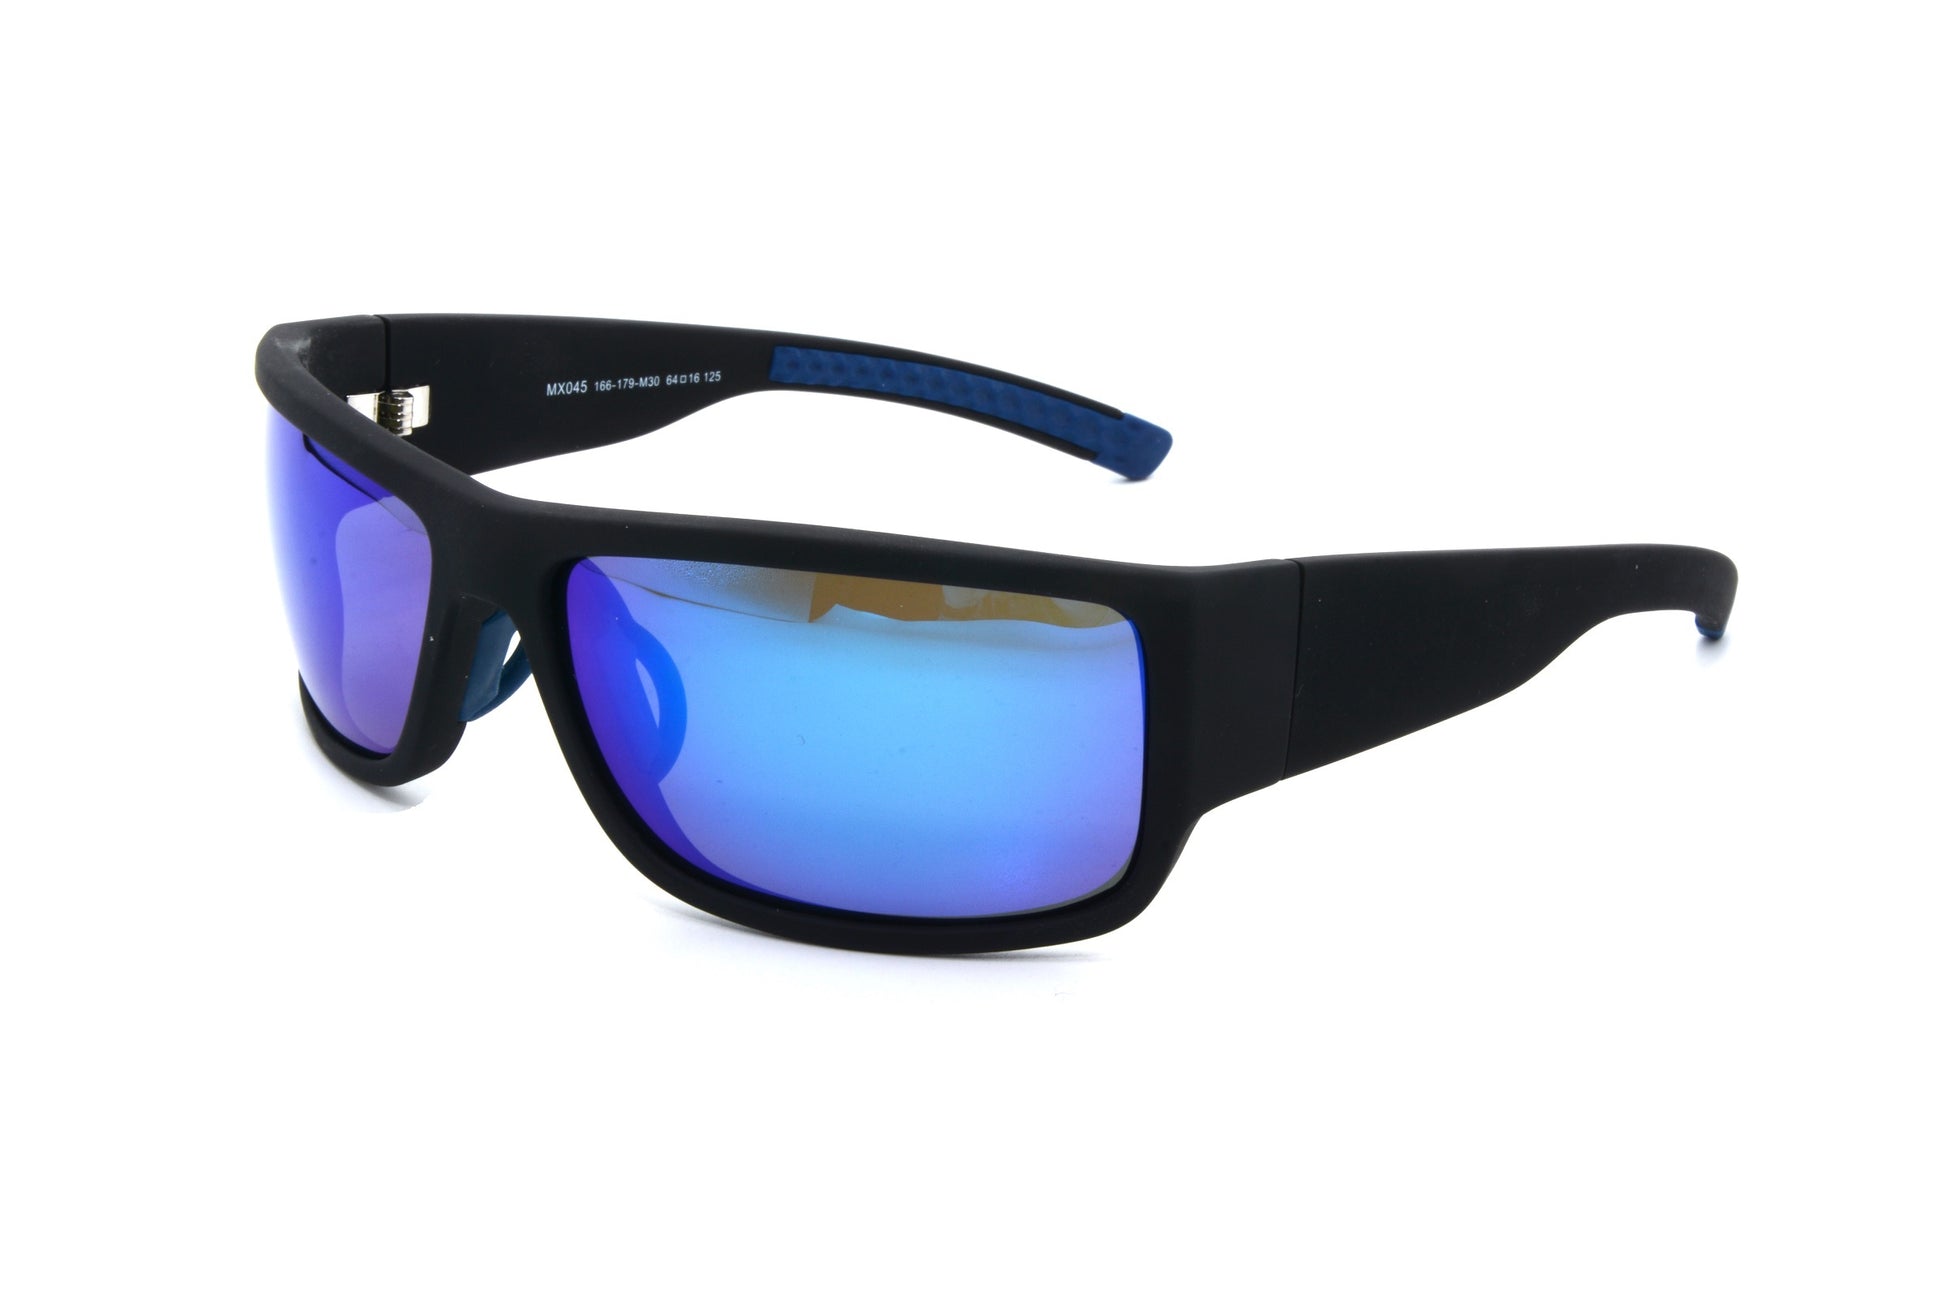 Sunglasses, Matrix MX 045, 166-179-M30